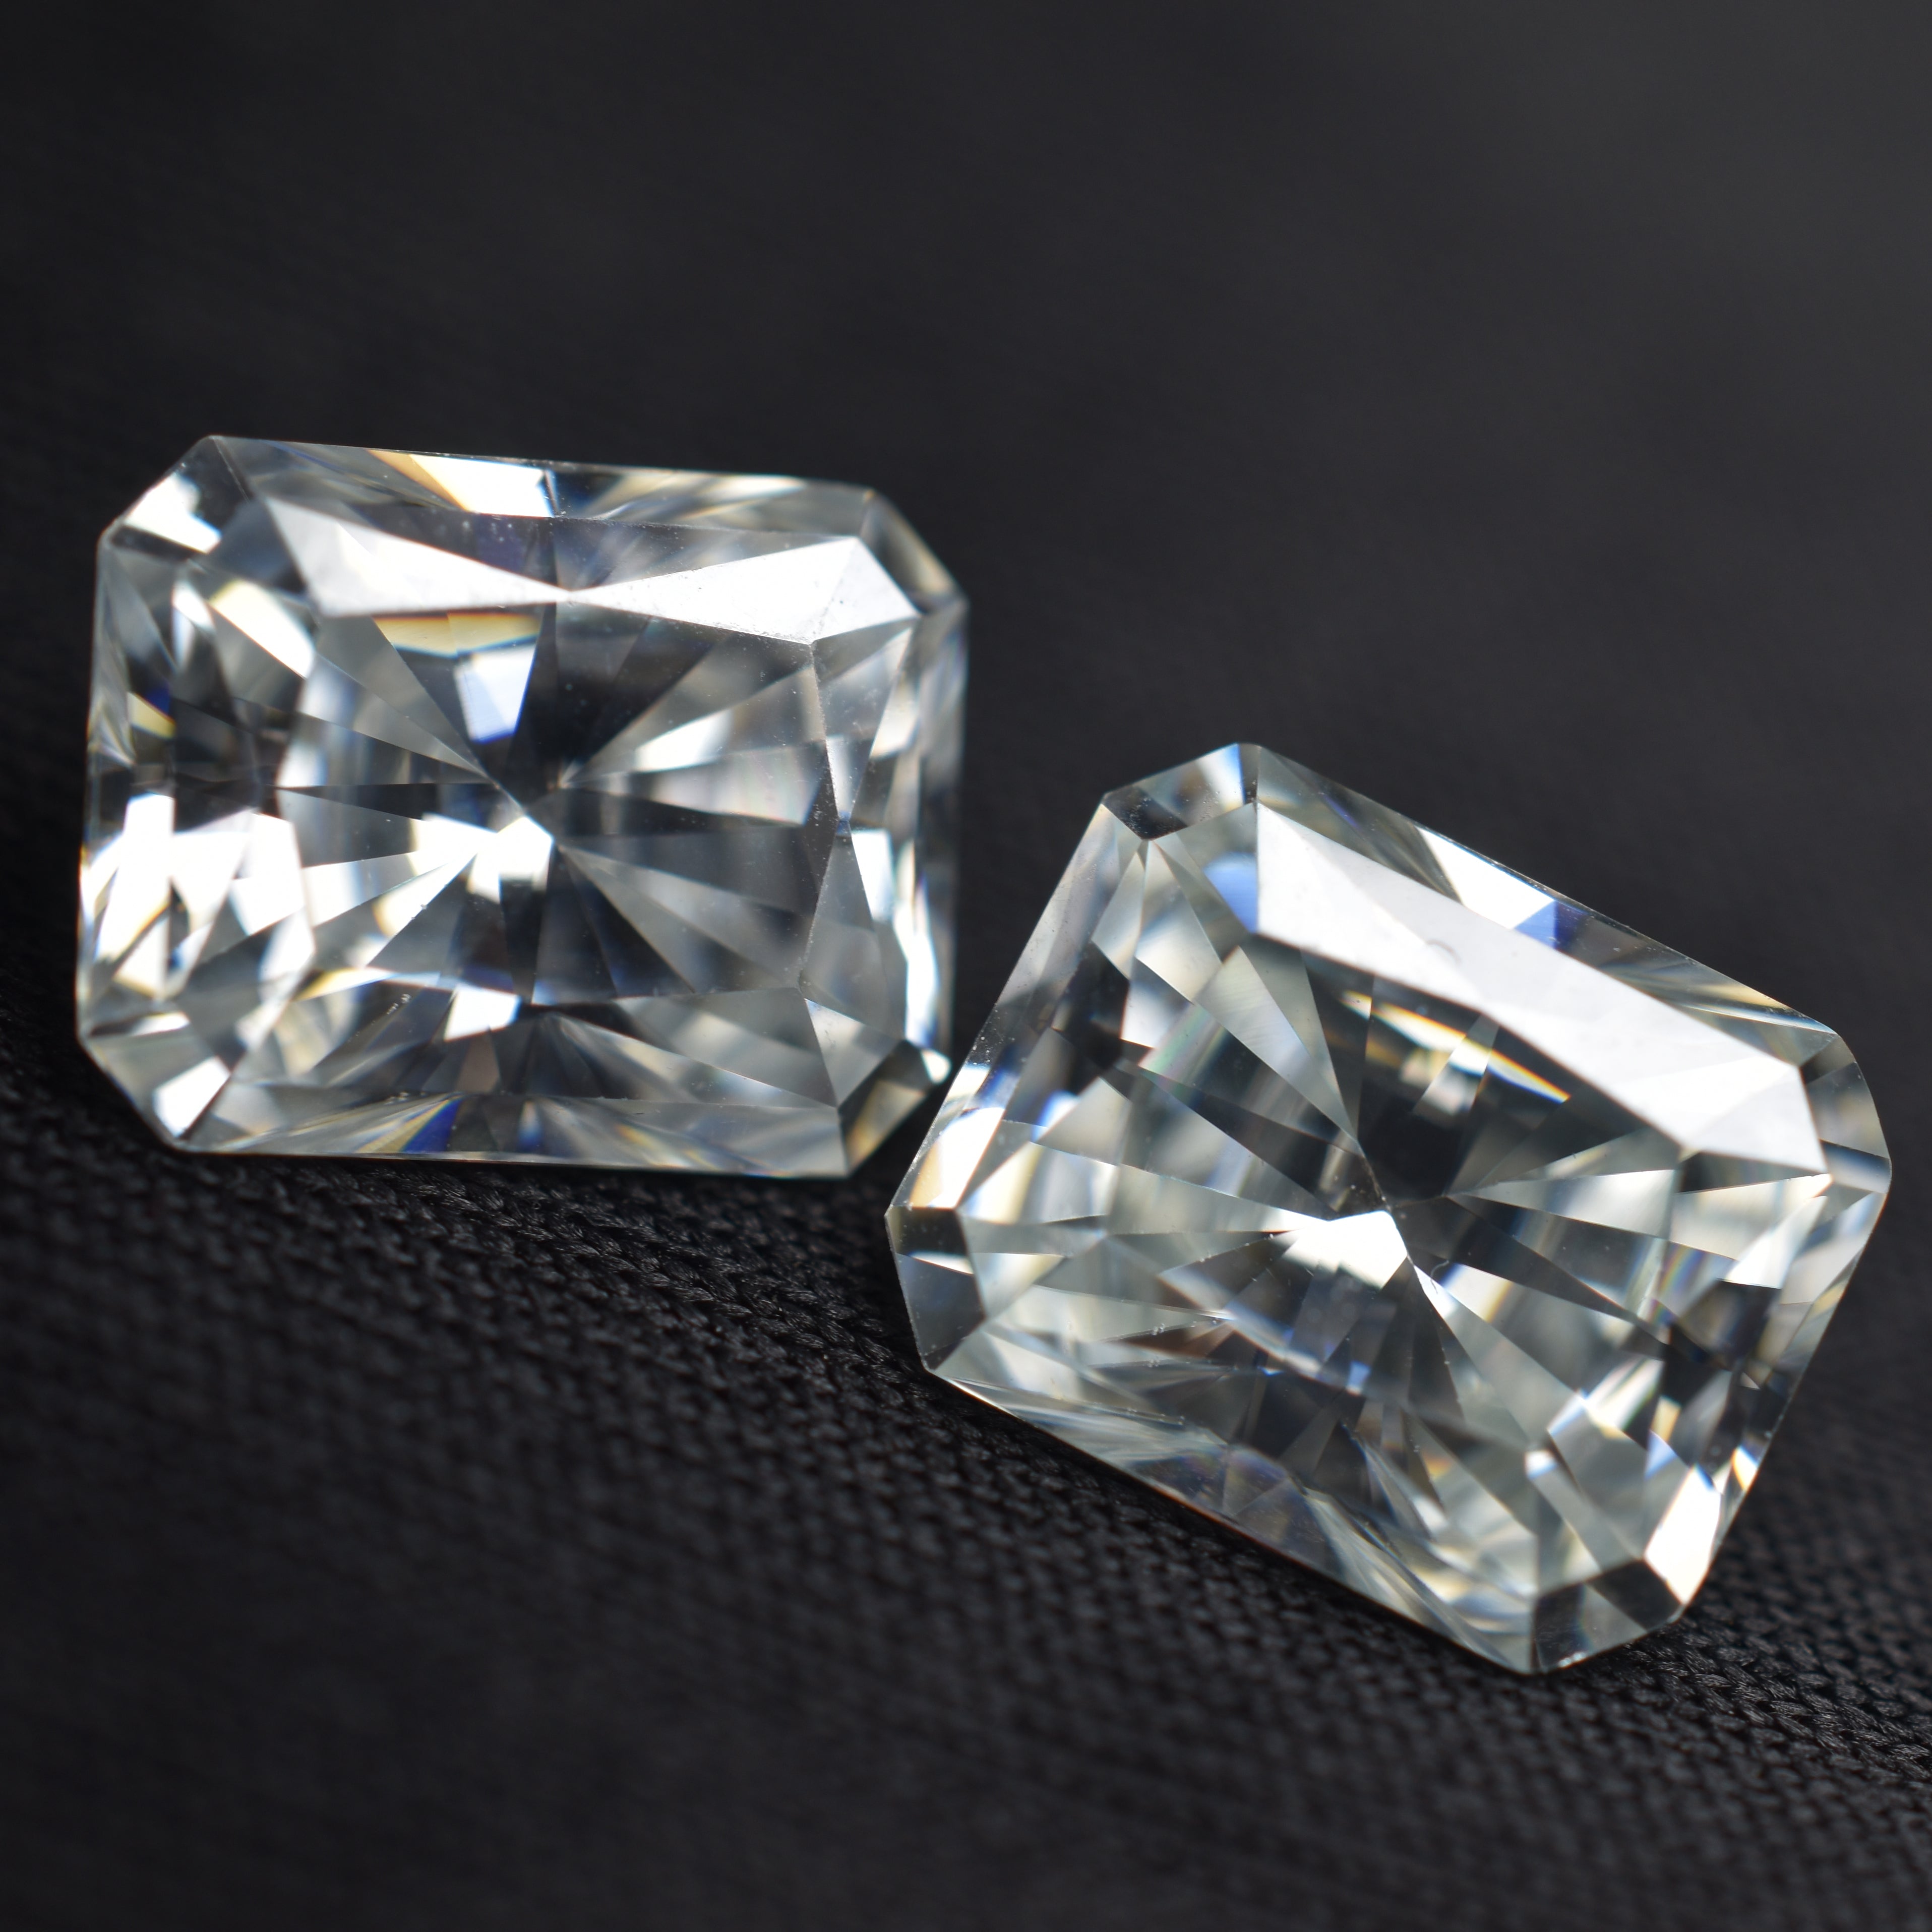 ON DEMAND Moissanite !! Radiant Shape 7.02 Carat Moissanite CERTIFIED Loose Gemstone 10x8 MM VVS1 D Color Pair | Jewelry Making Gem | Gift for Her/ Him